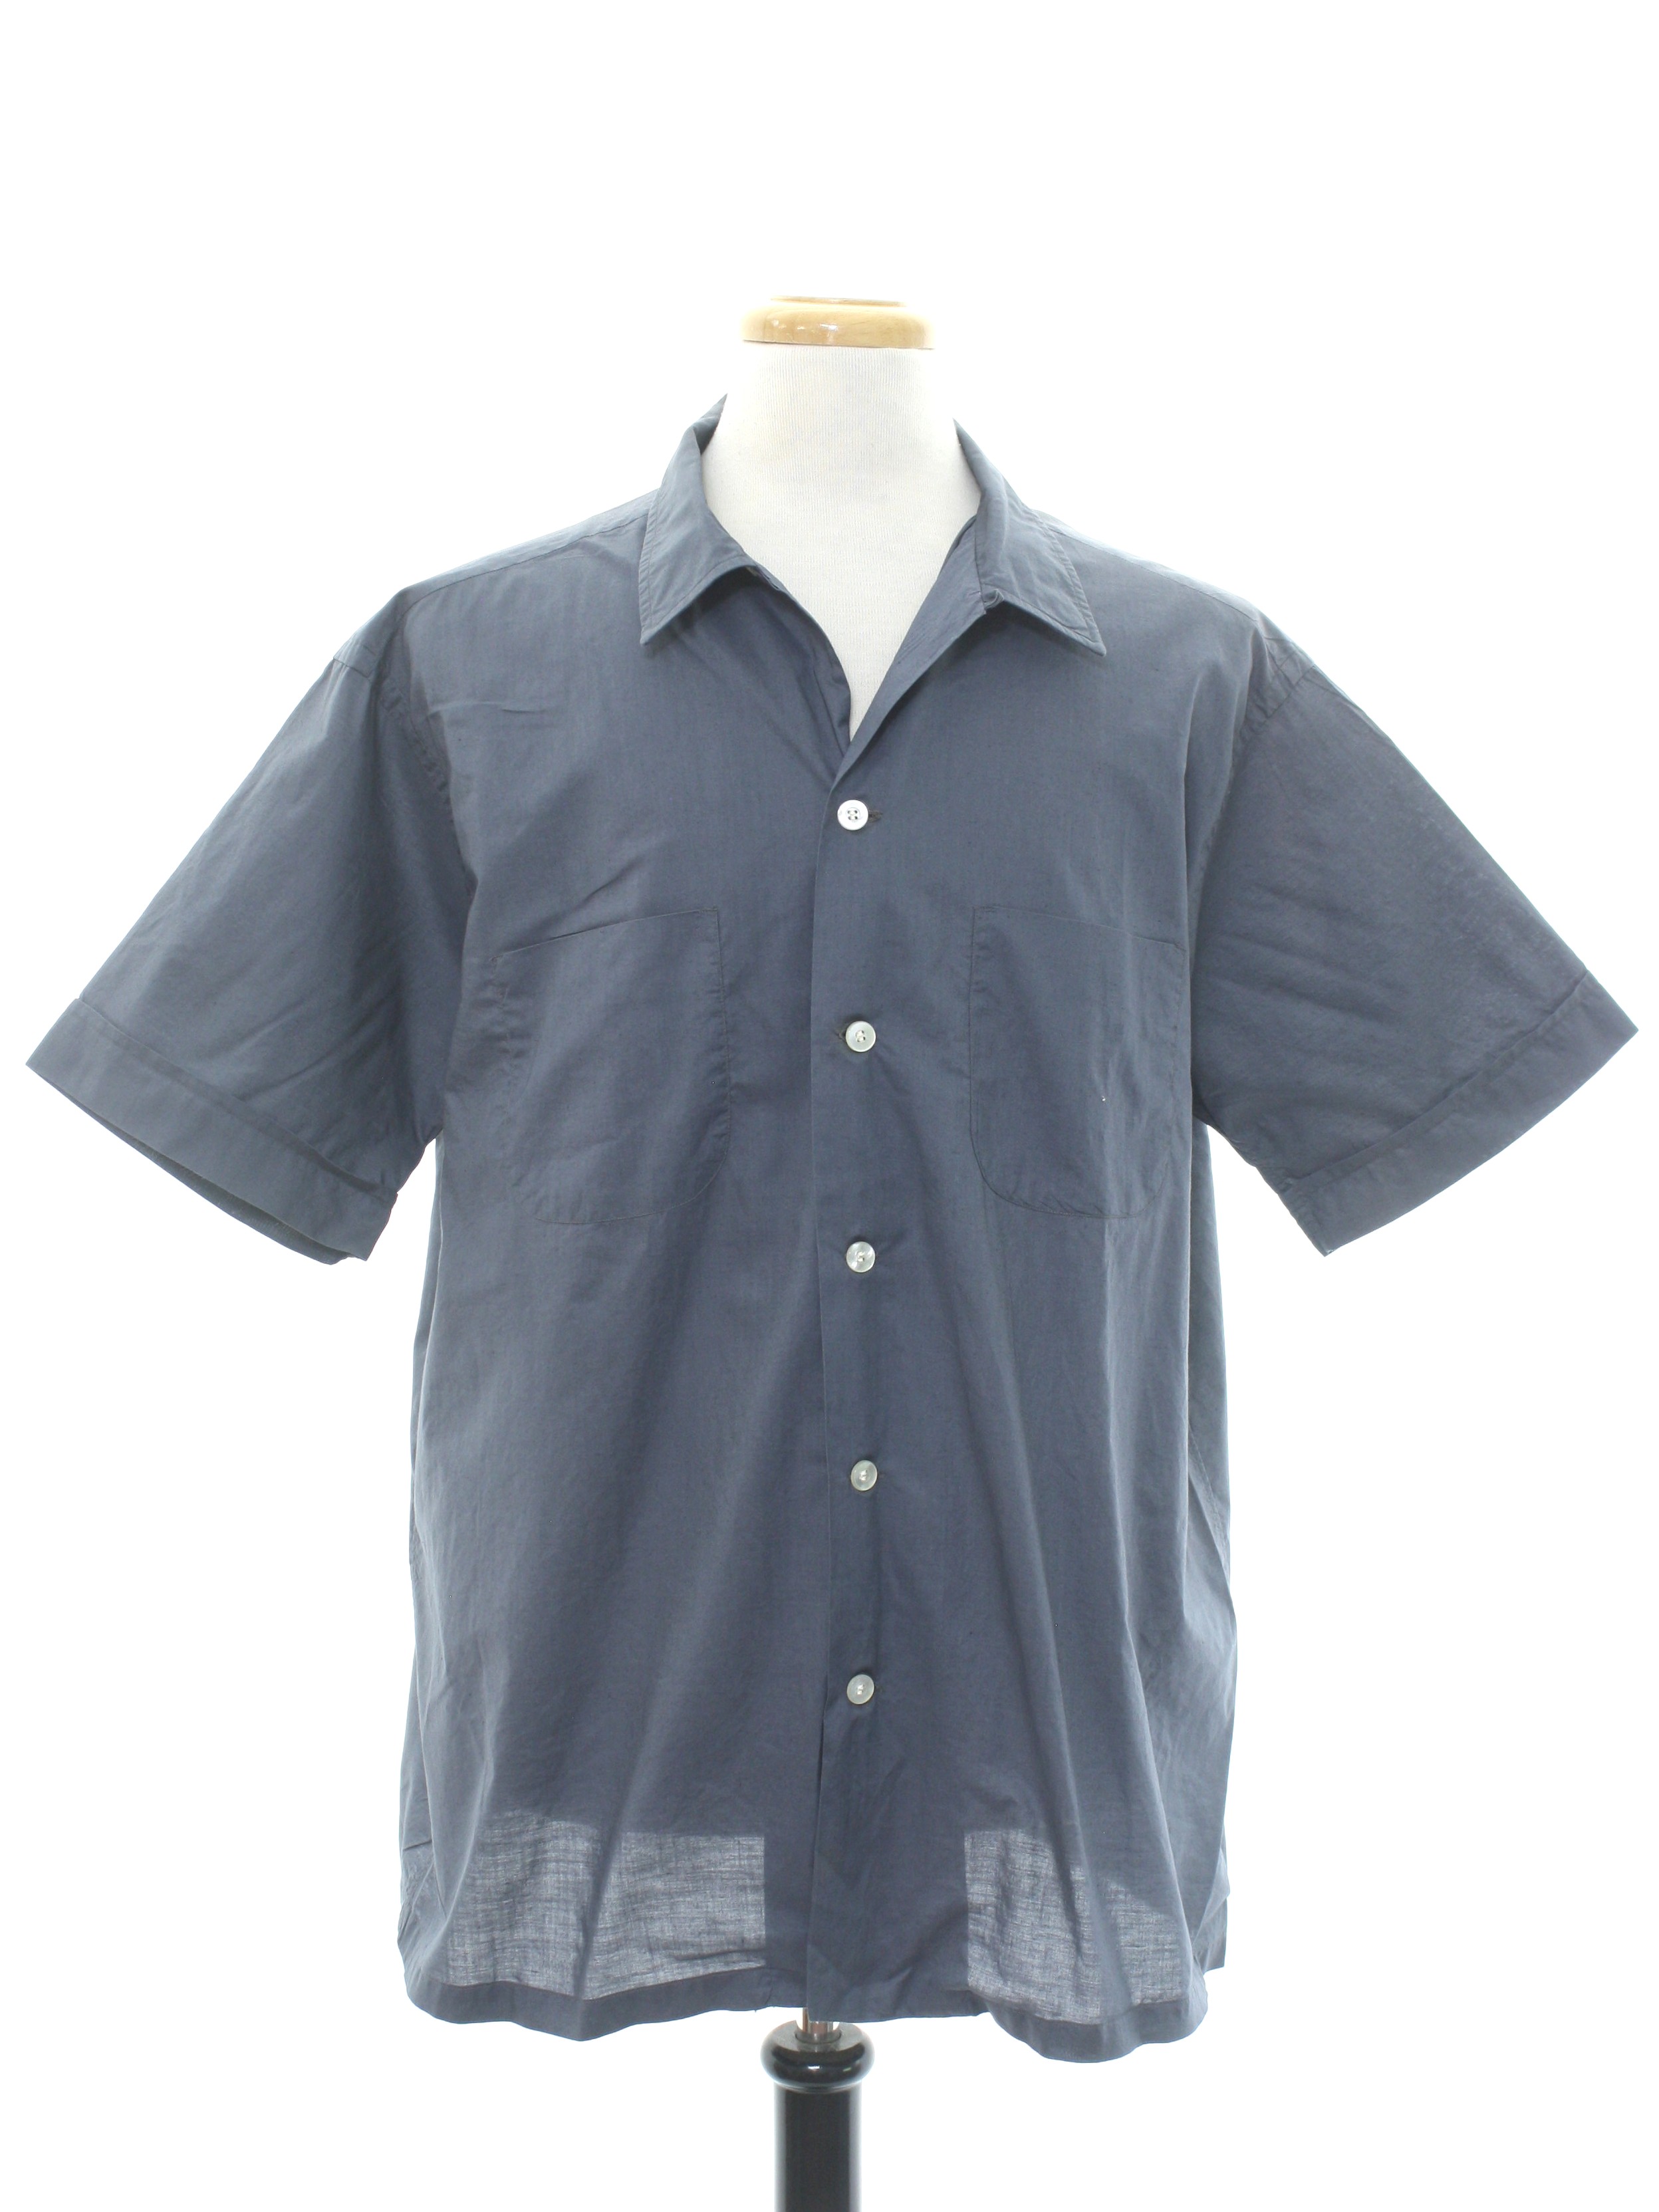 Excello 50's Vintage Shirt: Late 50s -Excello- Mens slate gray cotton ...